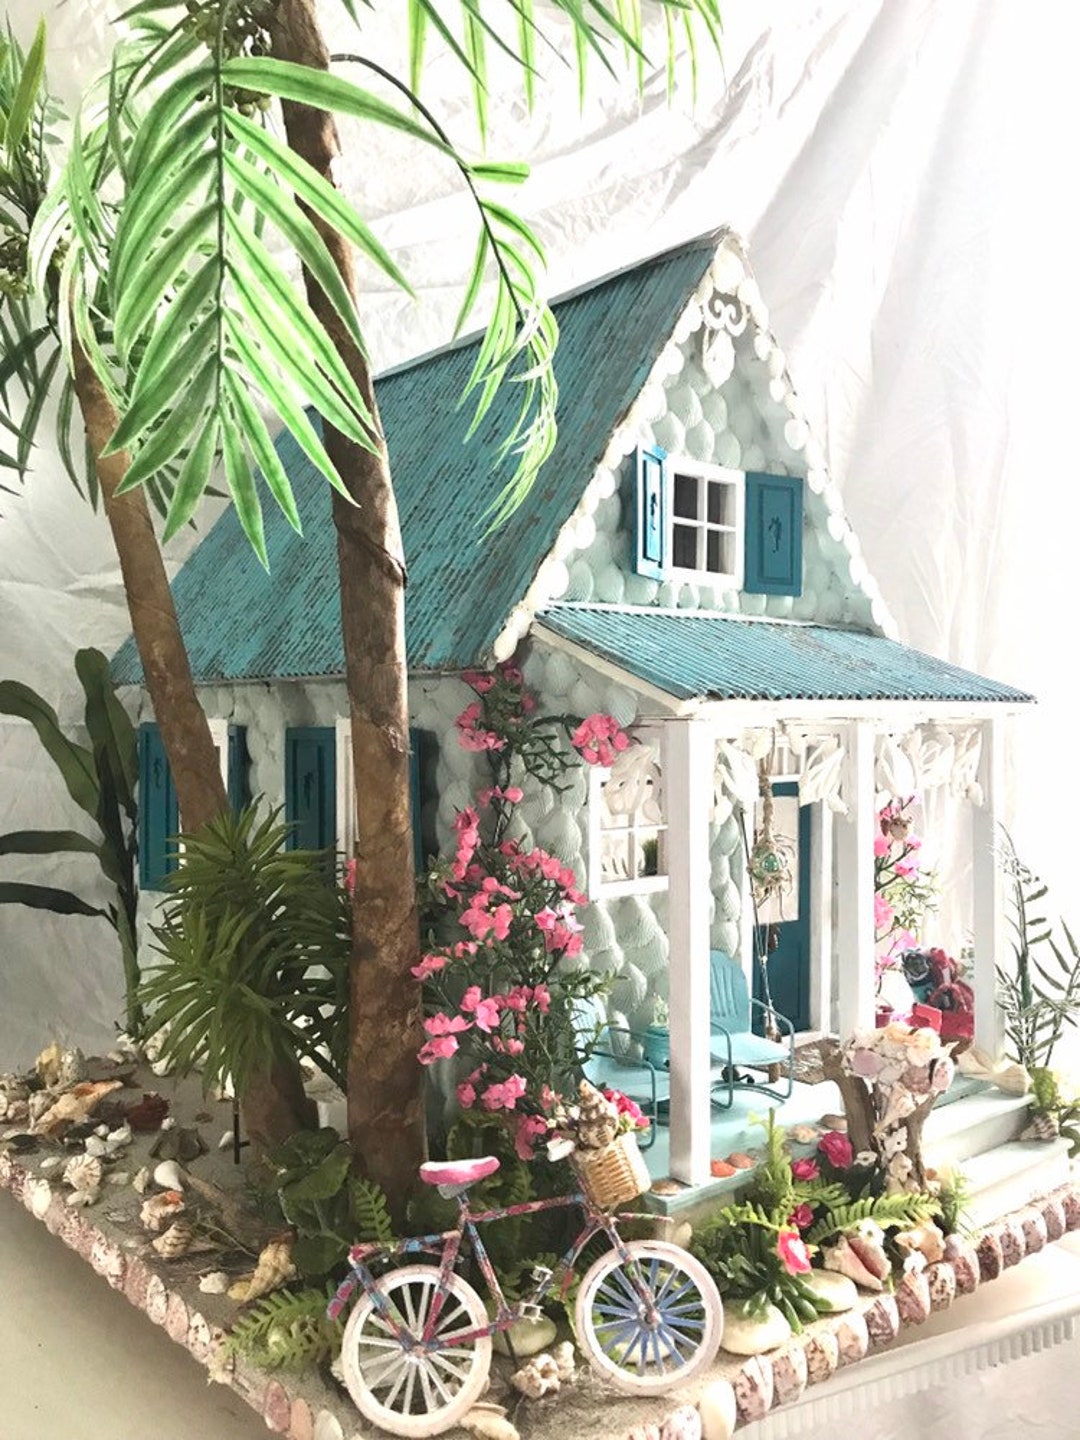 Antique Bisque Doll [xd61711] - $100.00 : Miniature Cottage, Dollhouse  Miniatures in Nashville